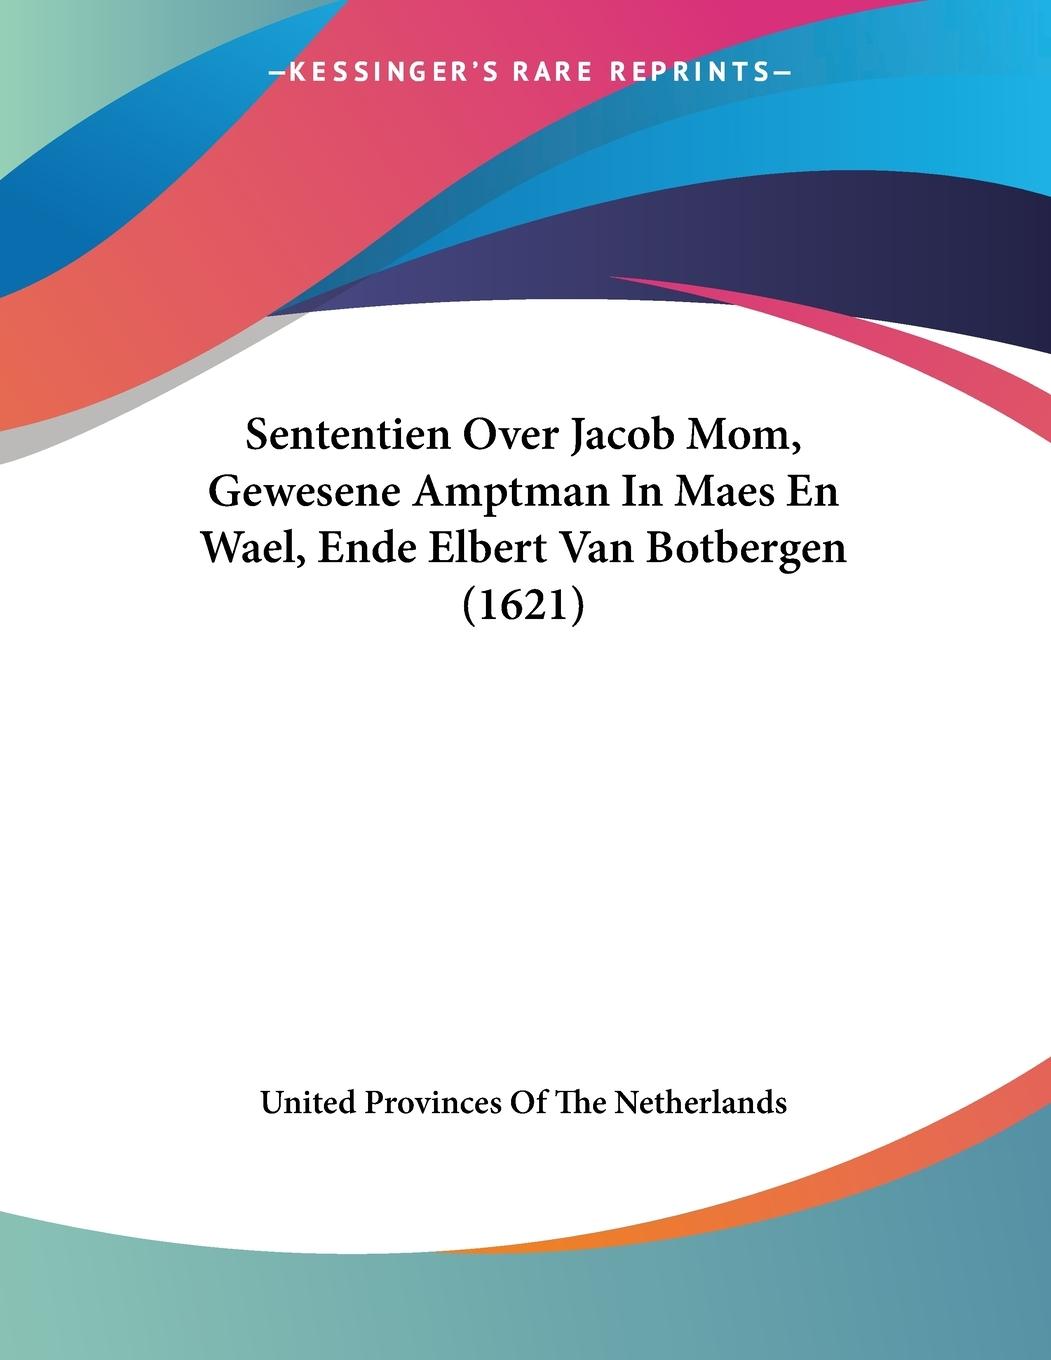 Sententien Over Jacob Mom, Gewesene Amptman In Maes En Wael, Ende Elbert Van Botbergen (1621) - United Provinces Of The Netherlands